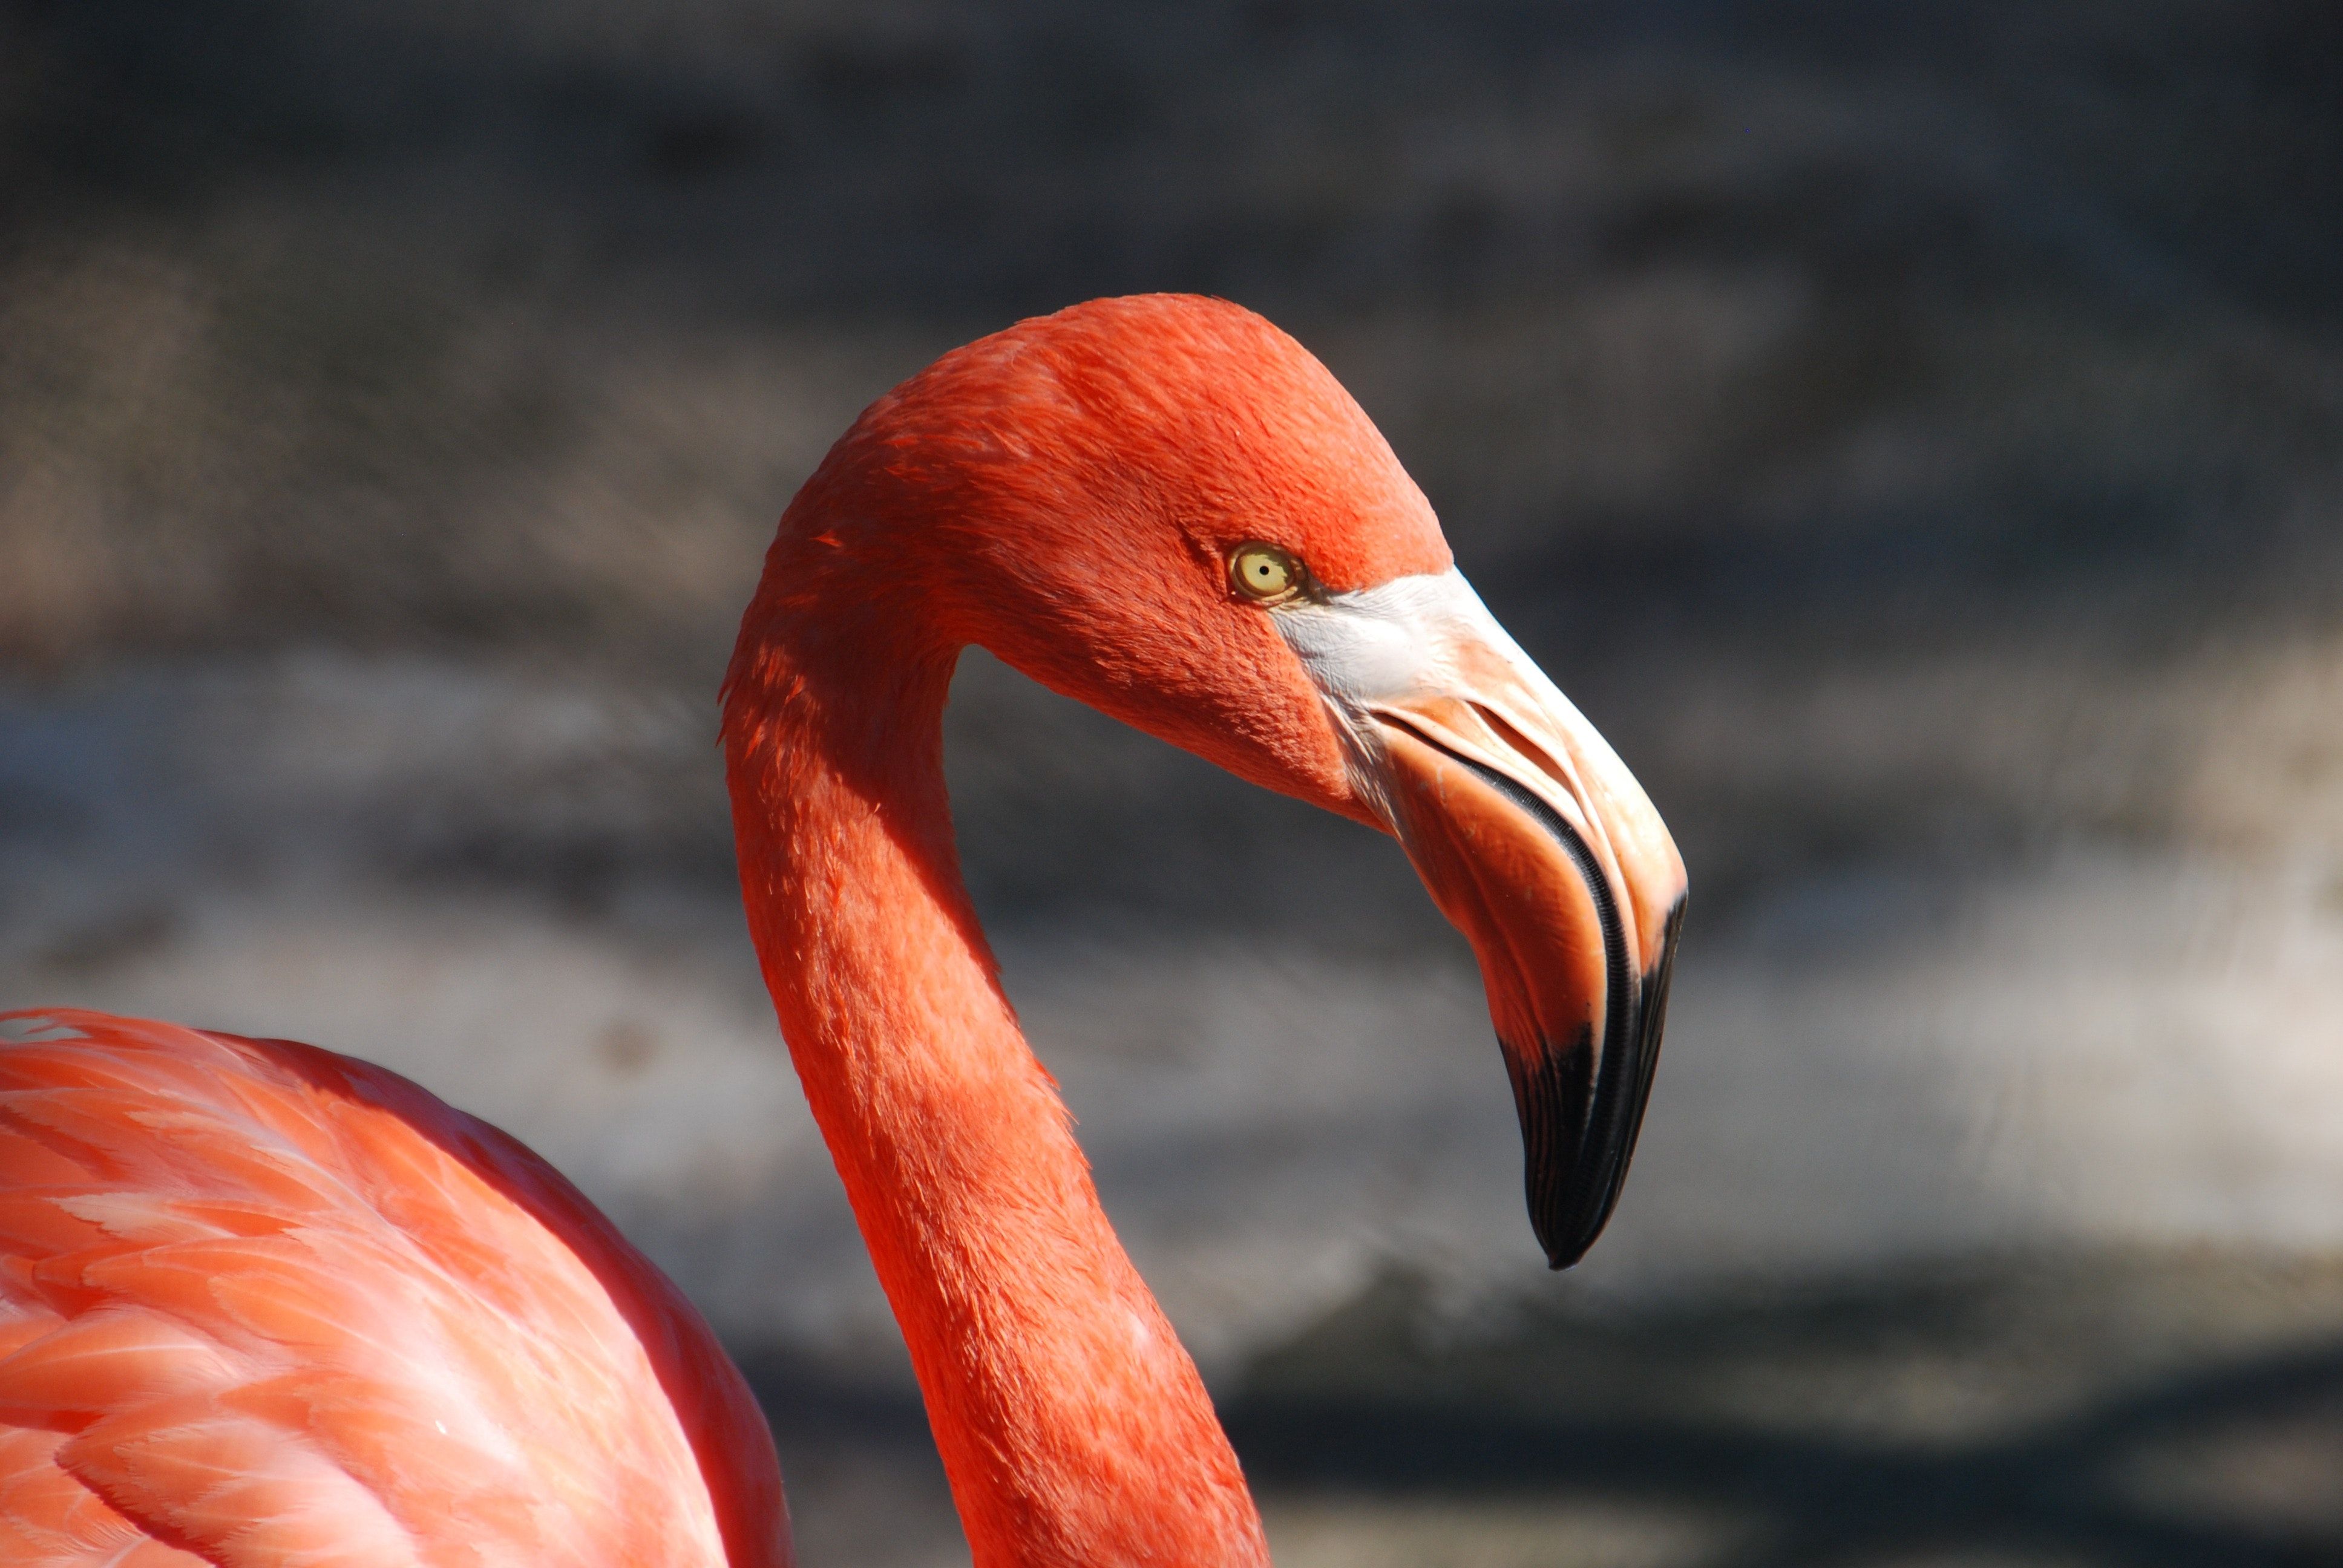  Flamingo Hintergrundbild 3872x2592. Flamingo Bilder Und Fotos · Kostenlos Downloaden · Stock Fotos